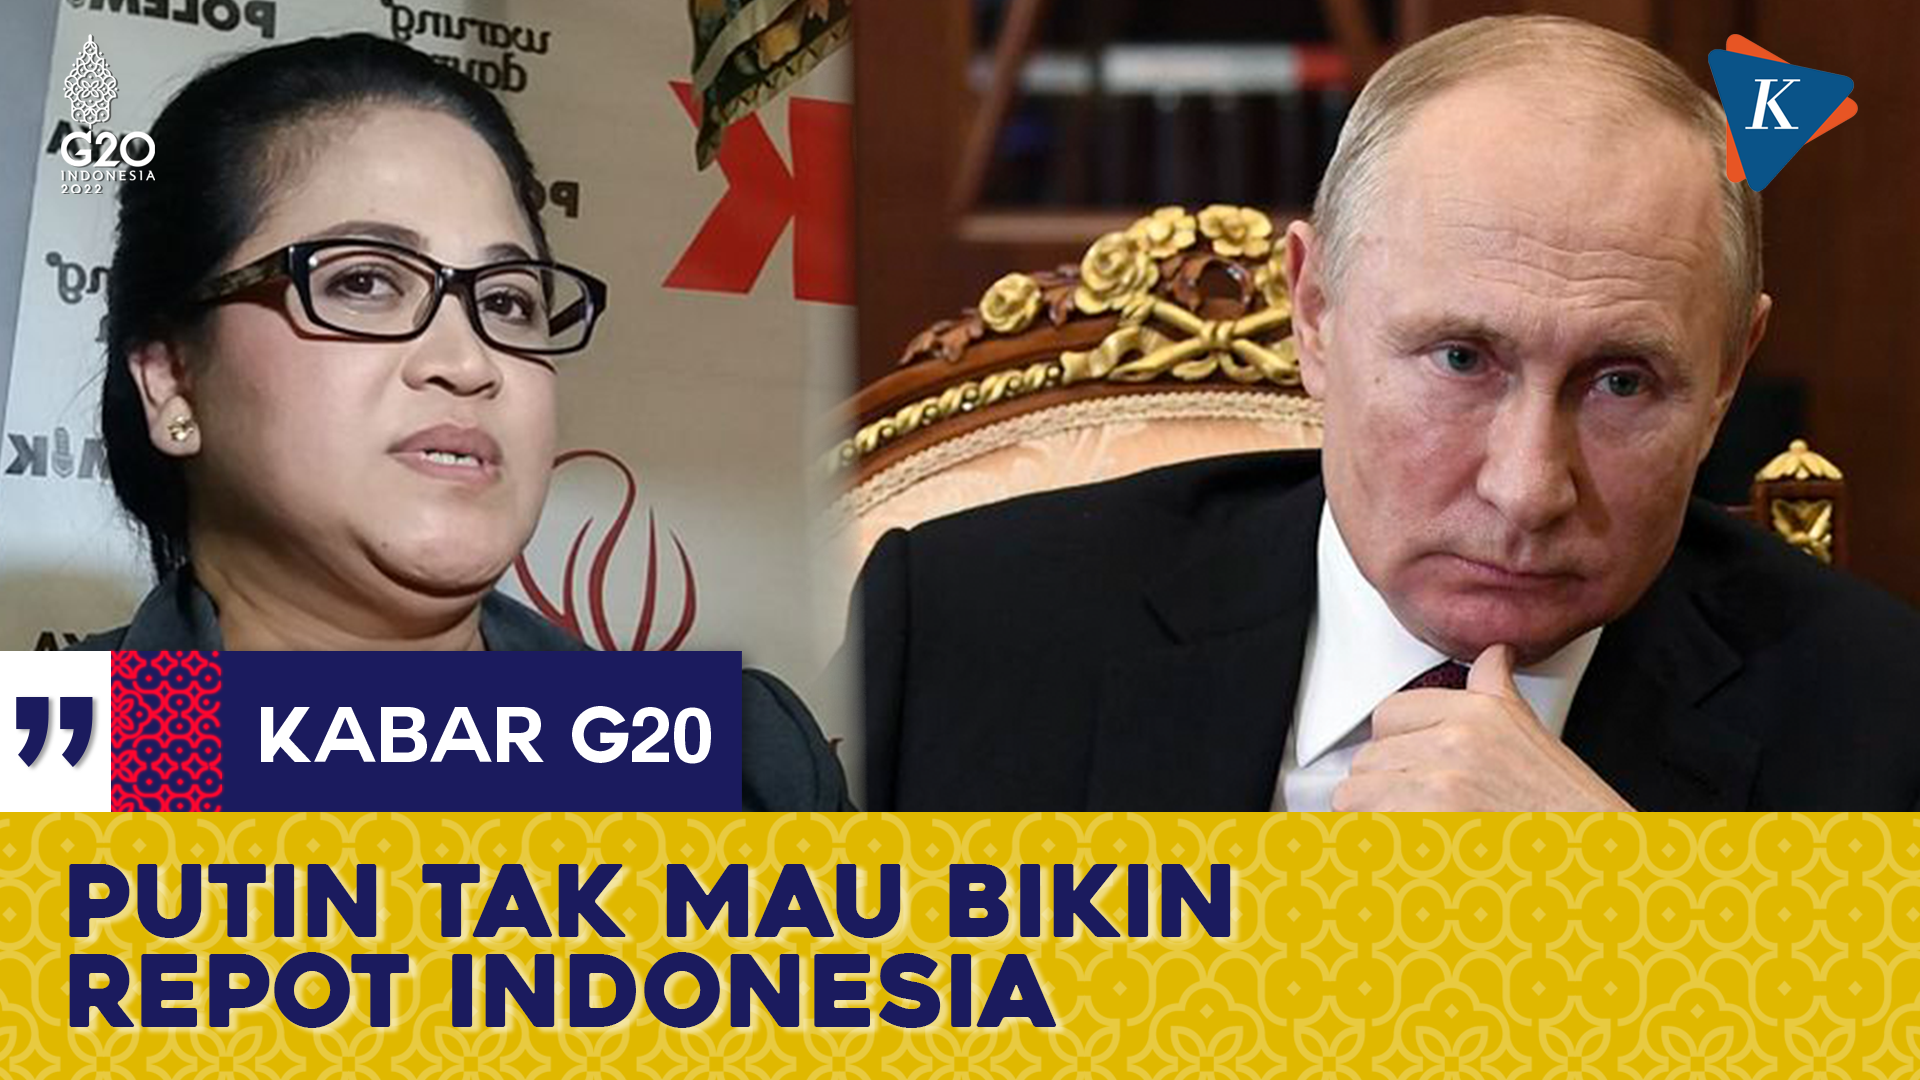 Pengamat Menilai Putin Tak Ikut KTT G20 agar Tak Membebani Indonesia